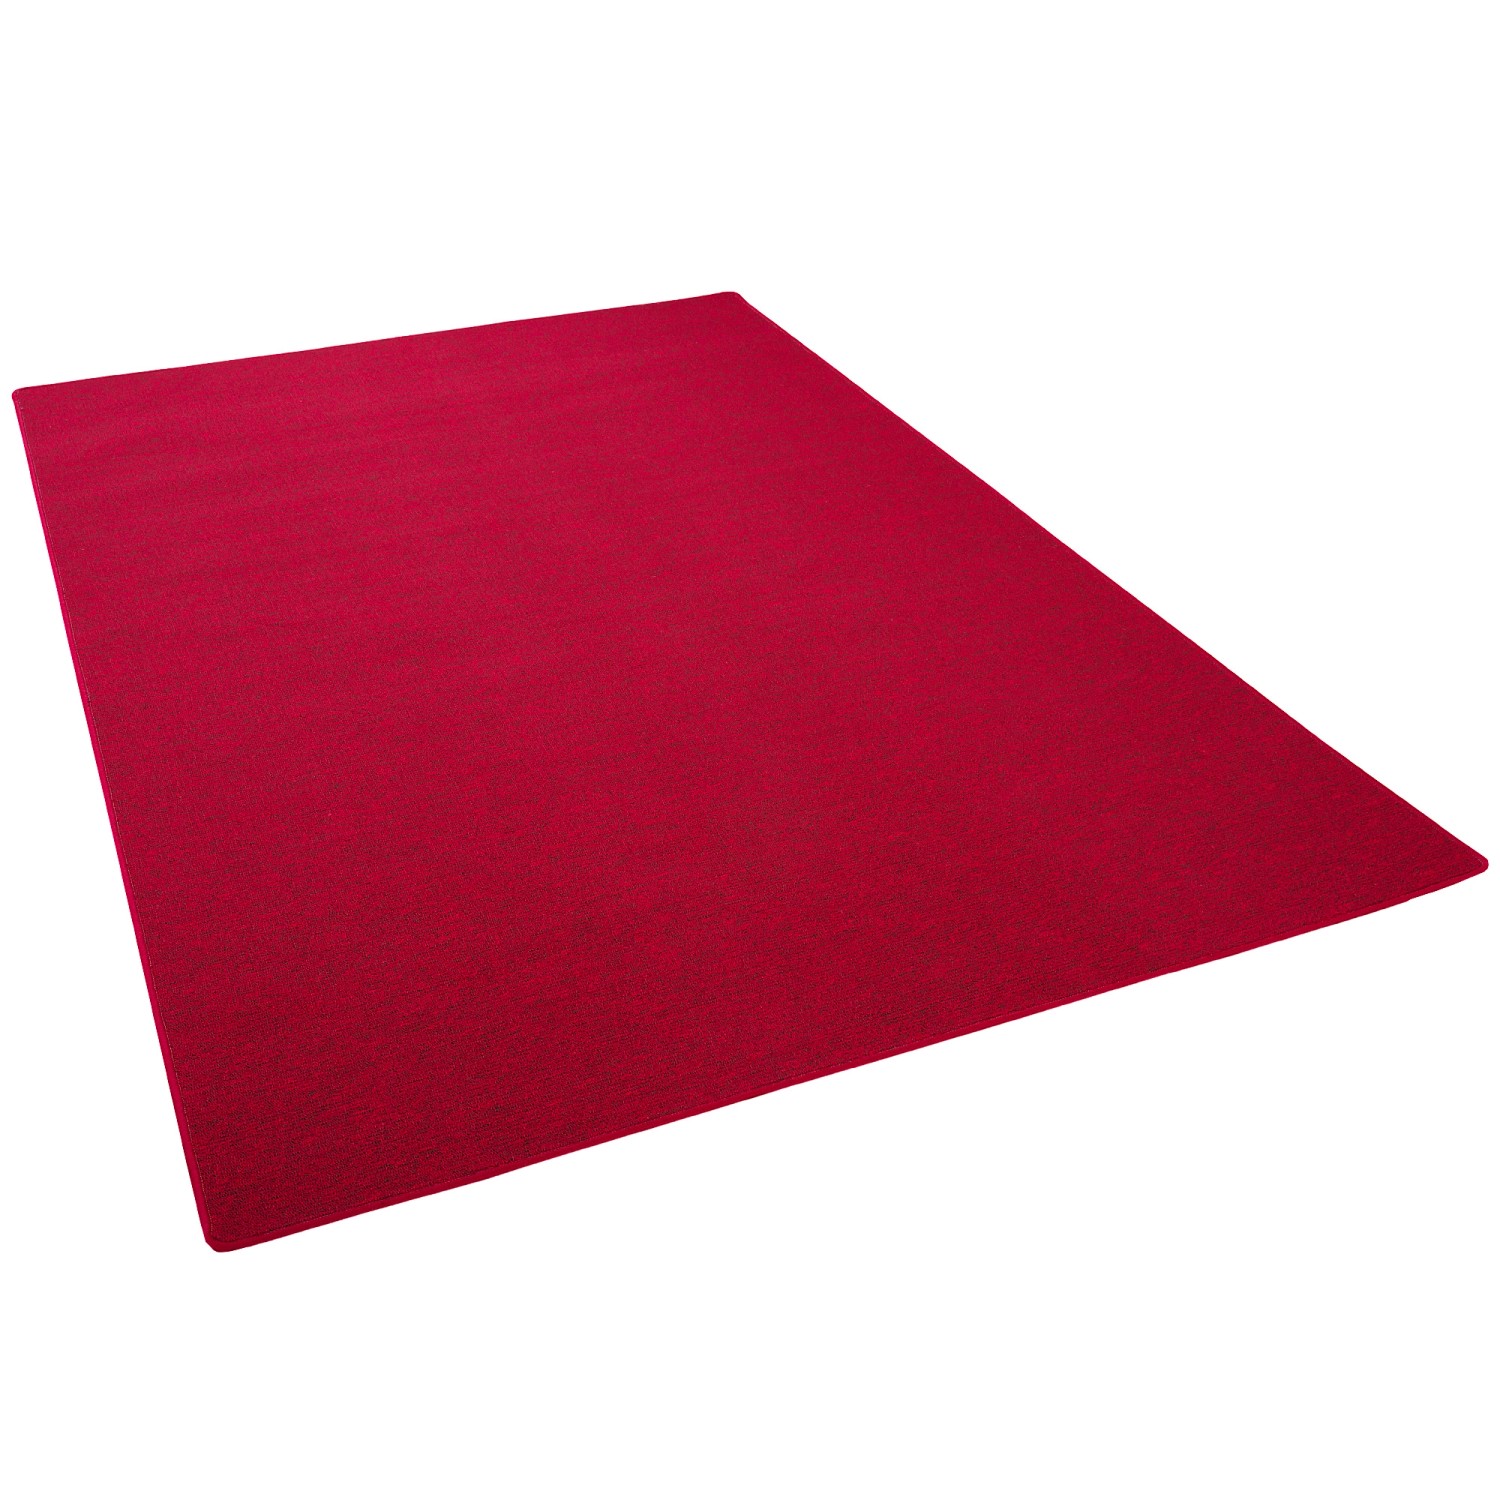 Snapstyle Feinschlingen Velour Teppich Strong Rot 100x100cm günstig online kaufen